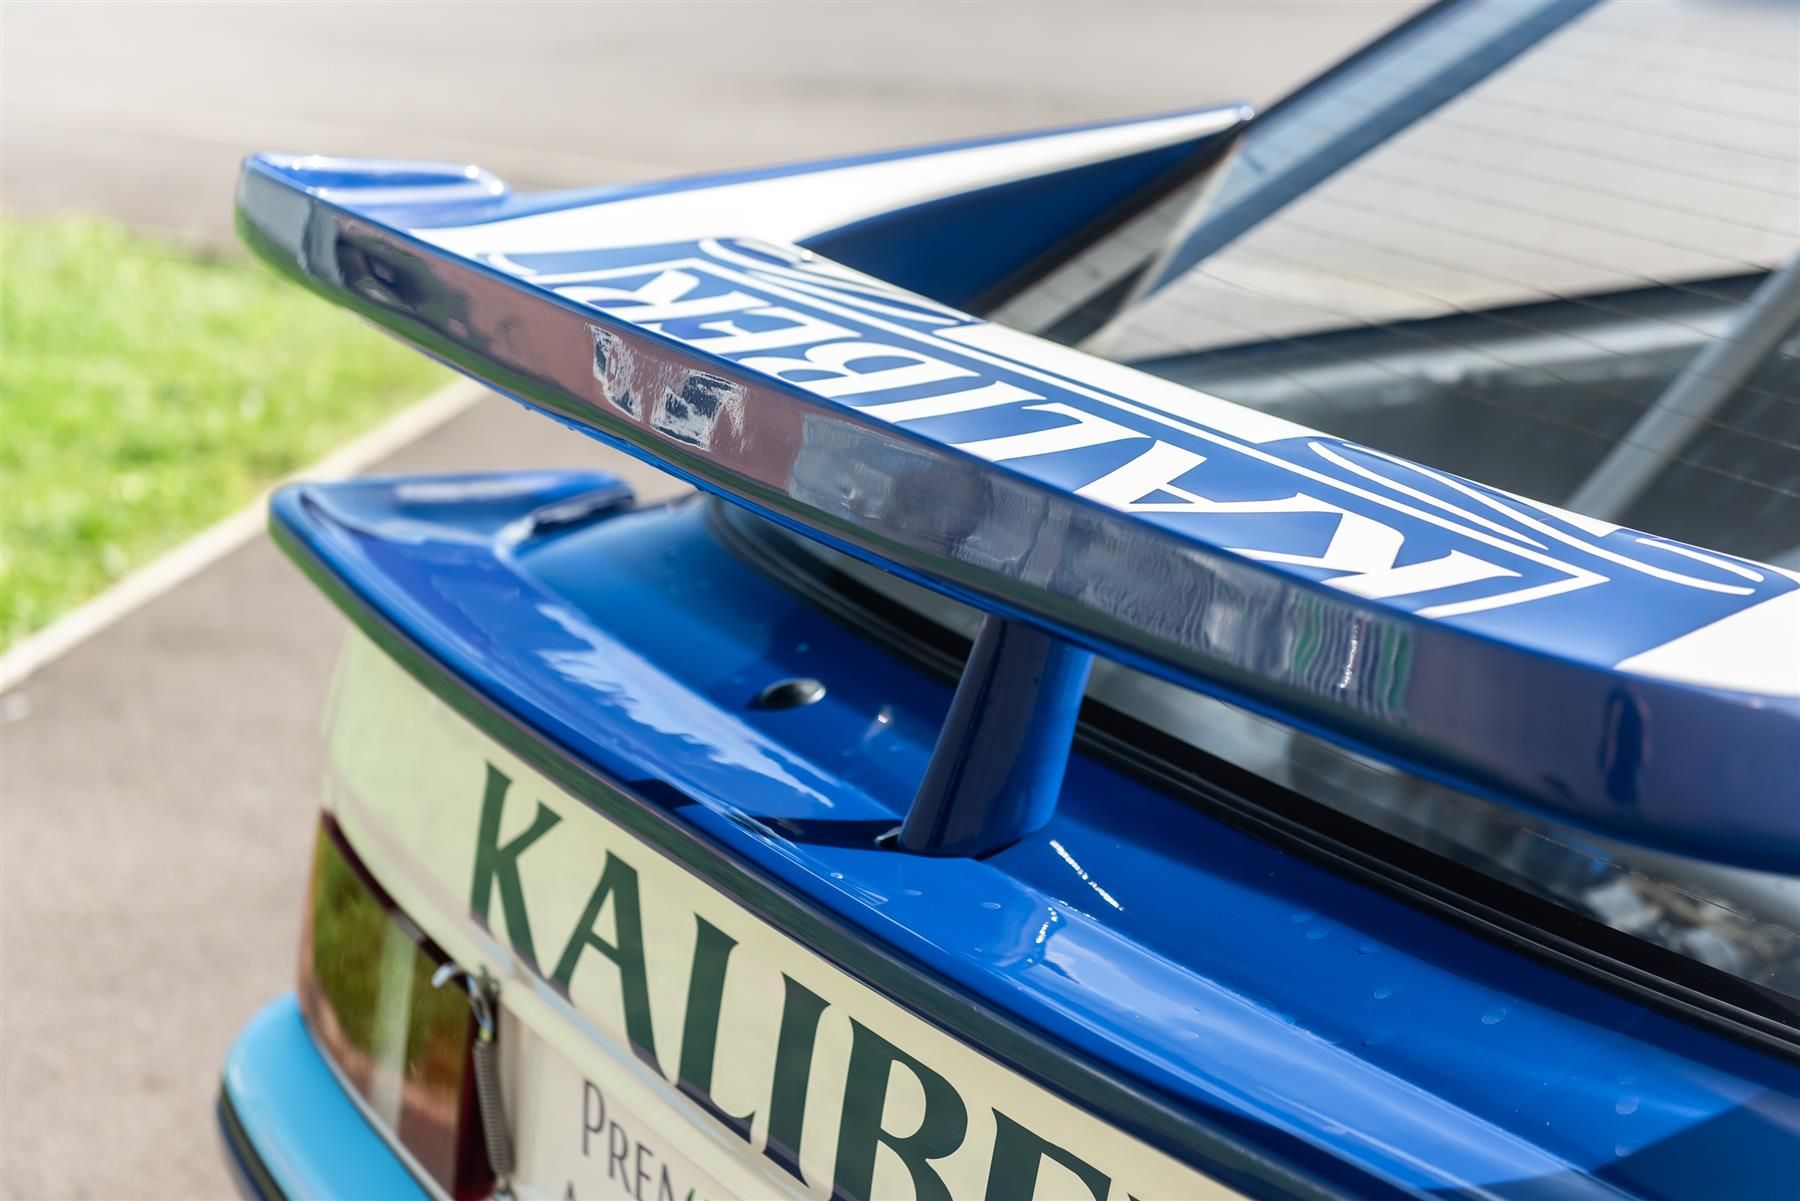 Ford Sierra RS Cosworth track car (Kaliber BTCC tribute)